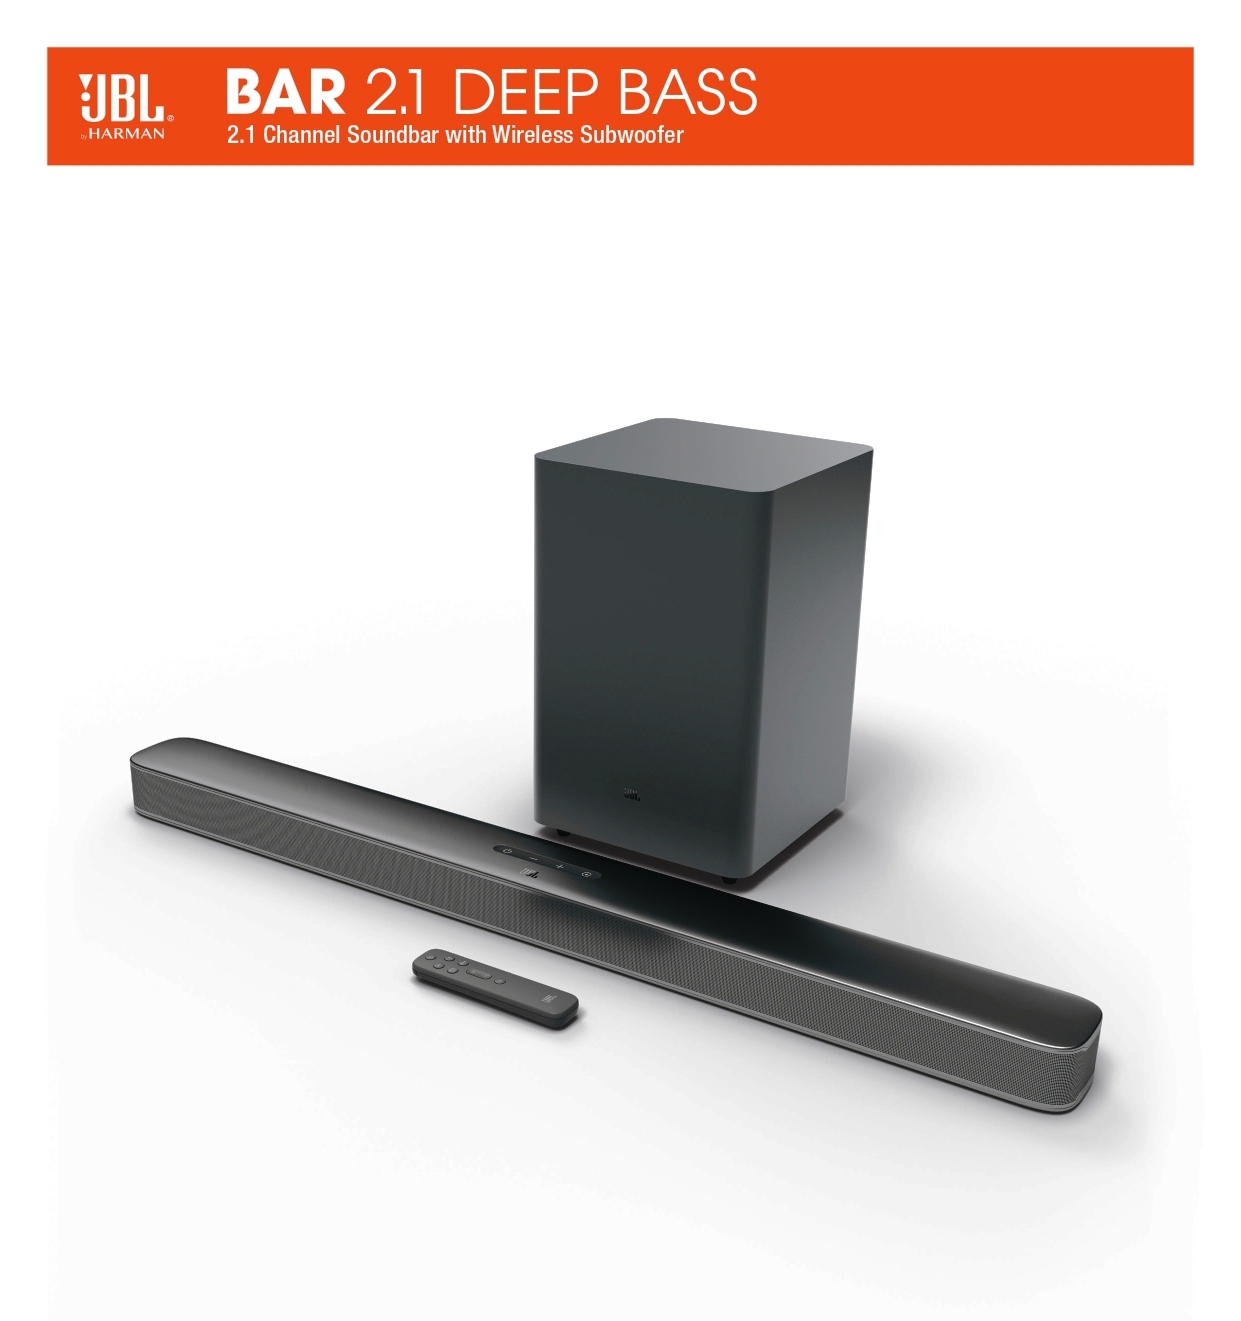 Jbl deep bass 2.1 mk2. Саундбар JBL Bar 2.1. Саундбар JBL Bar 2.1 Deep Bass черный. Саундбар JBL Bar 2.1 черный. JBL Deep 2.1 саундбар.